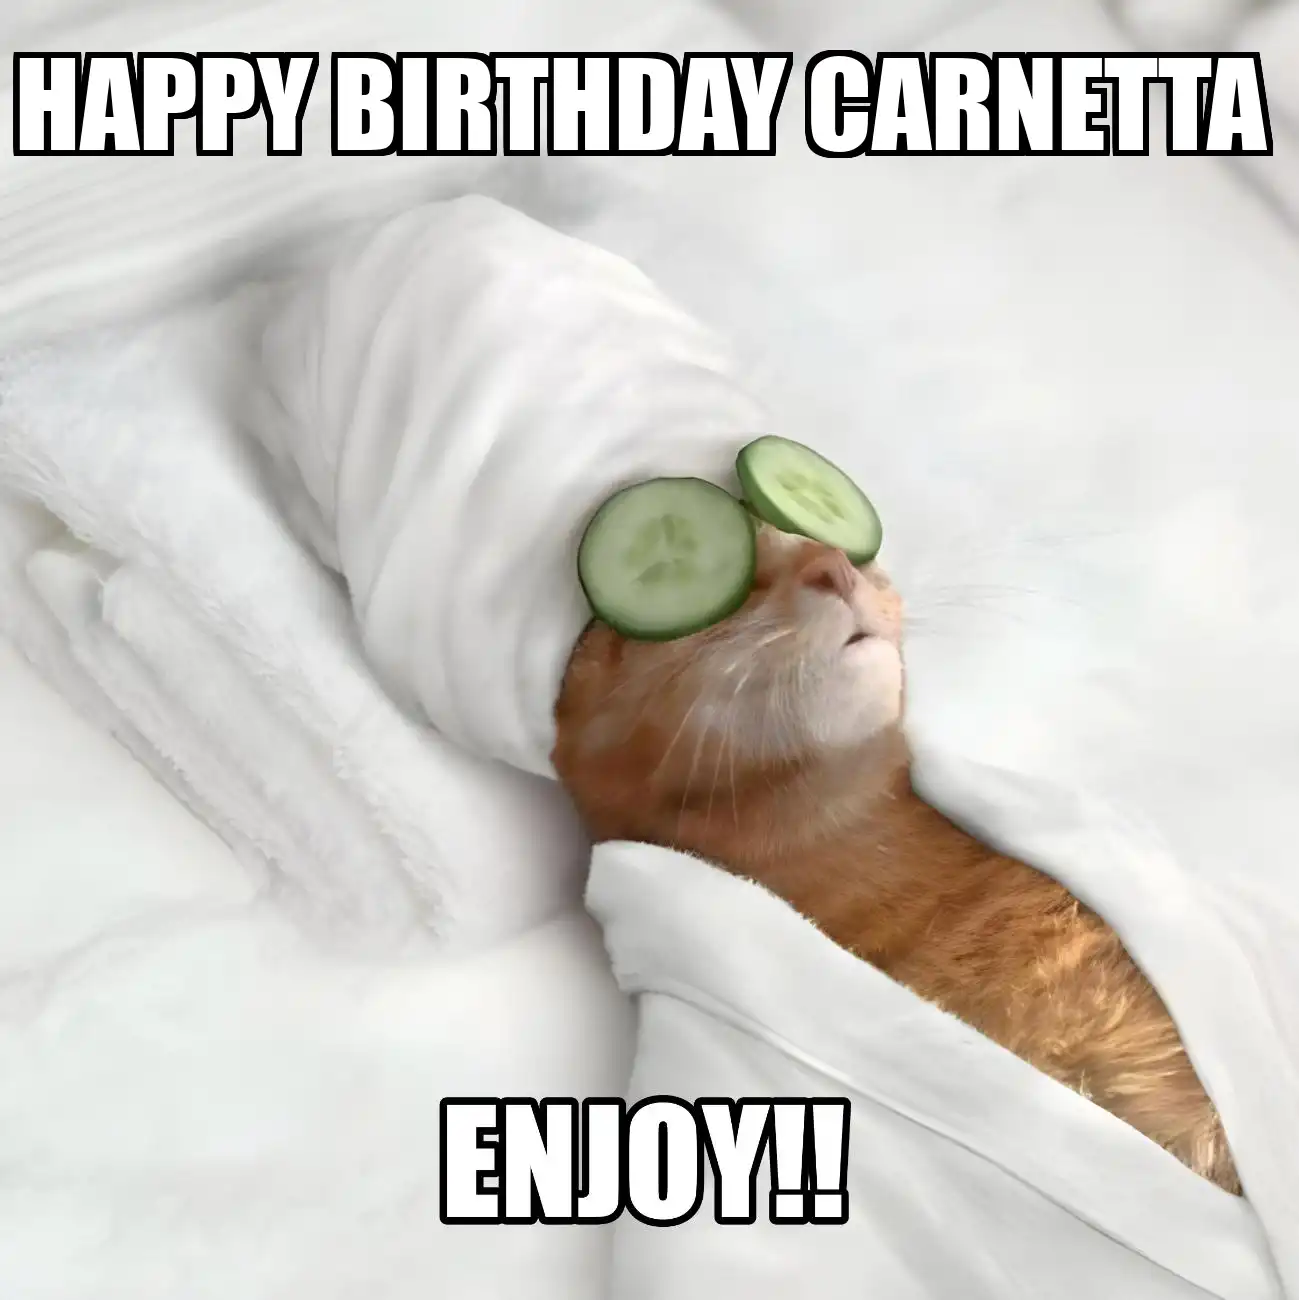 Happy Birthday Carnetta Enjoy Cat Meme